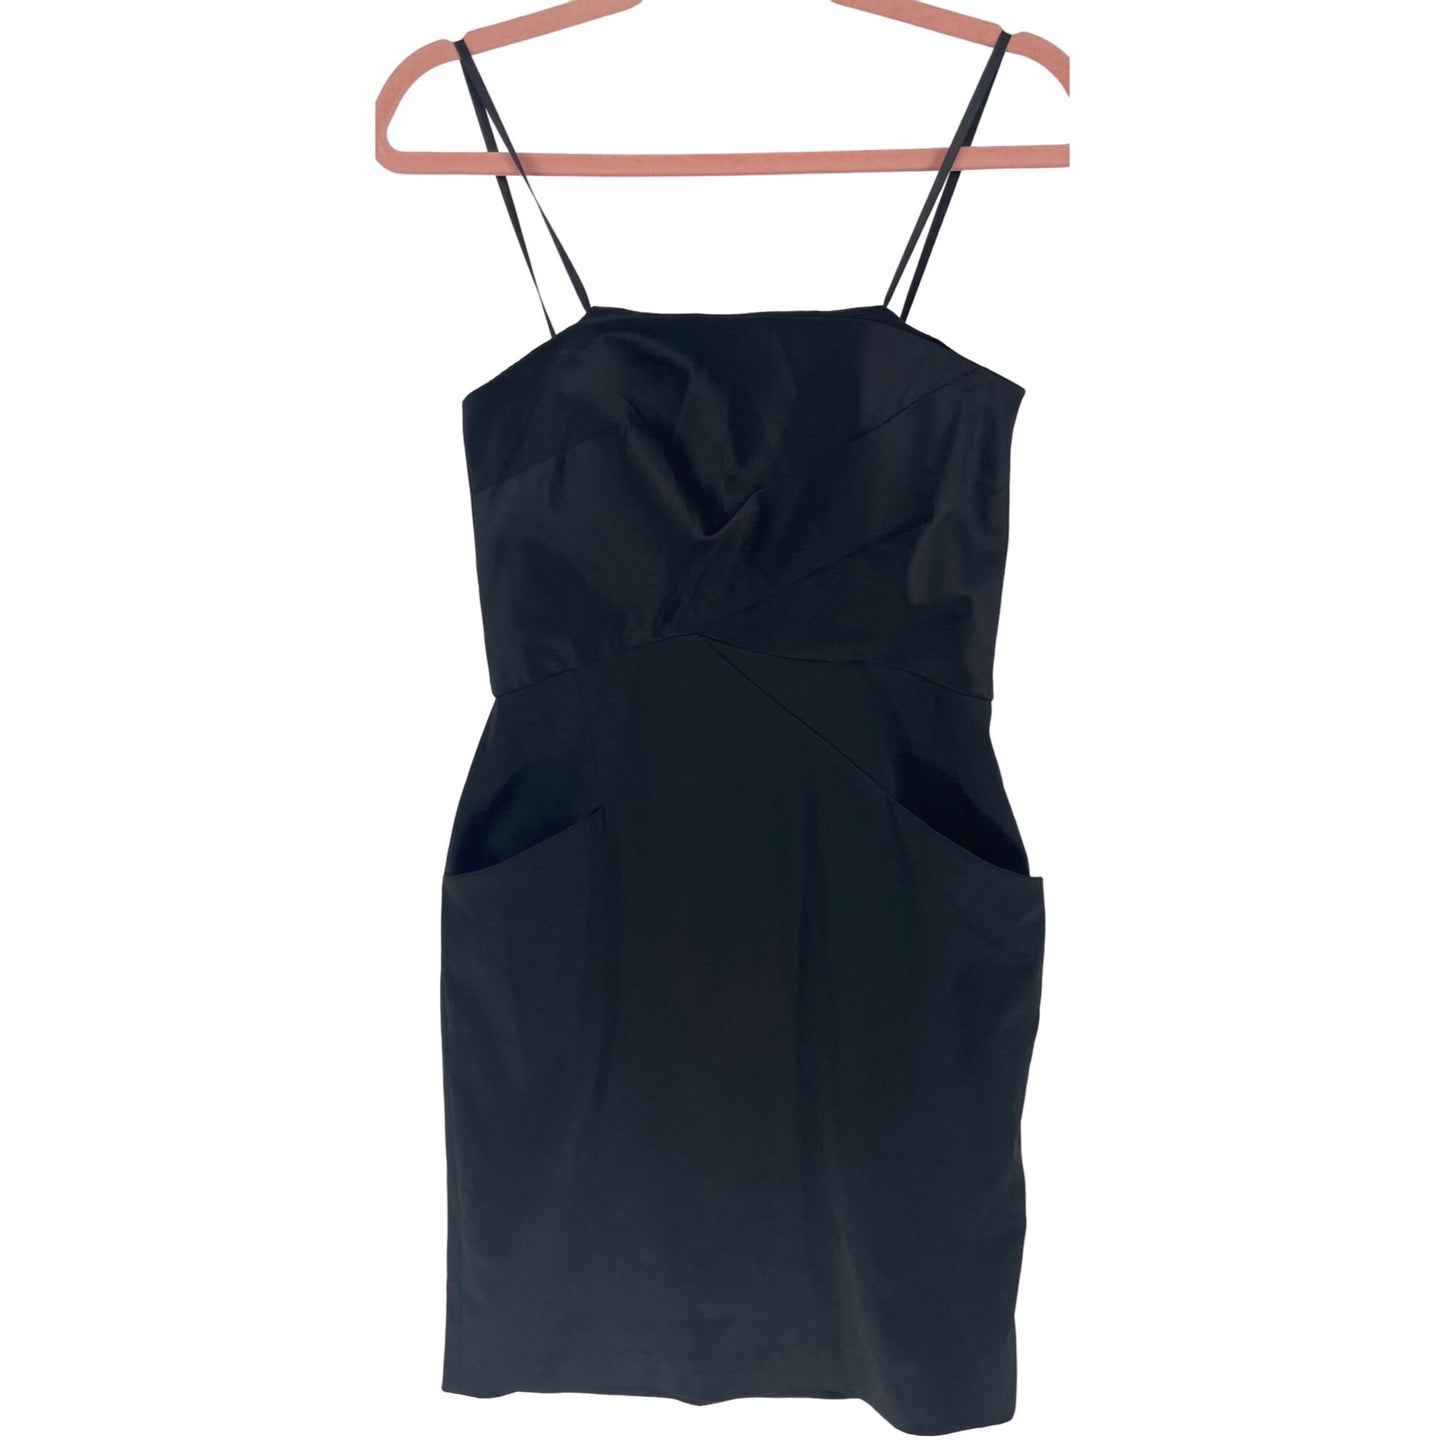 BCBG Paris Women's Size 6 Black Satin Strapless Sheath Dress W/ Pockets